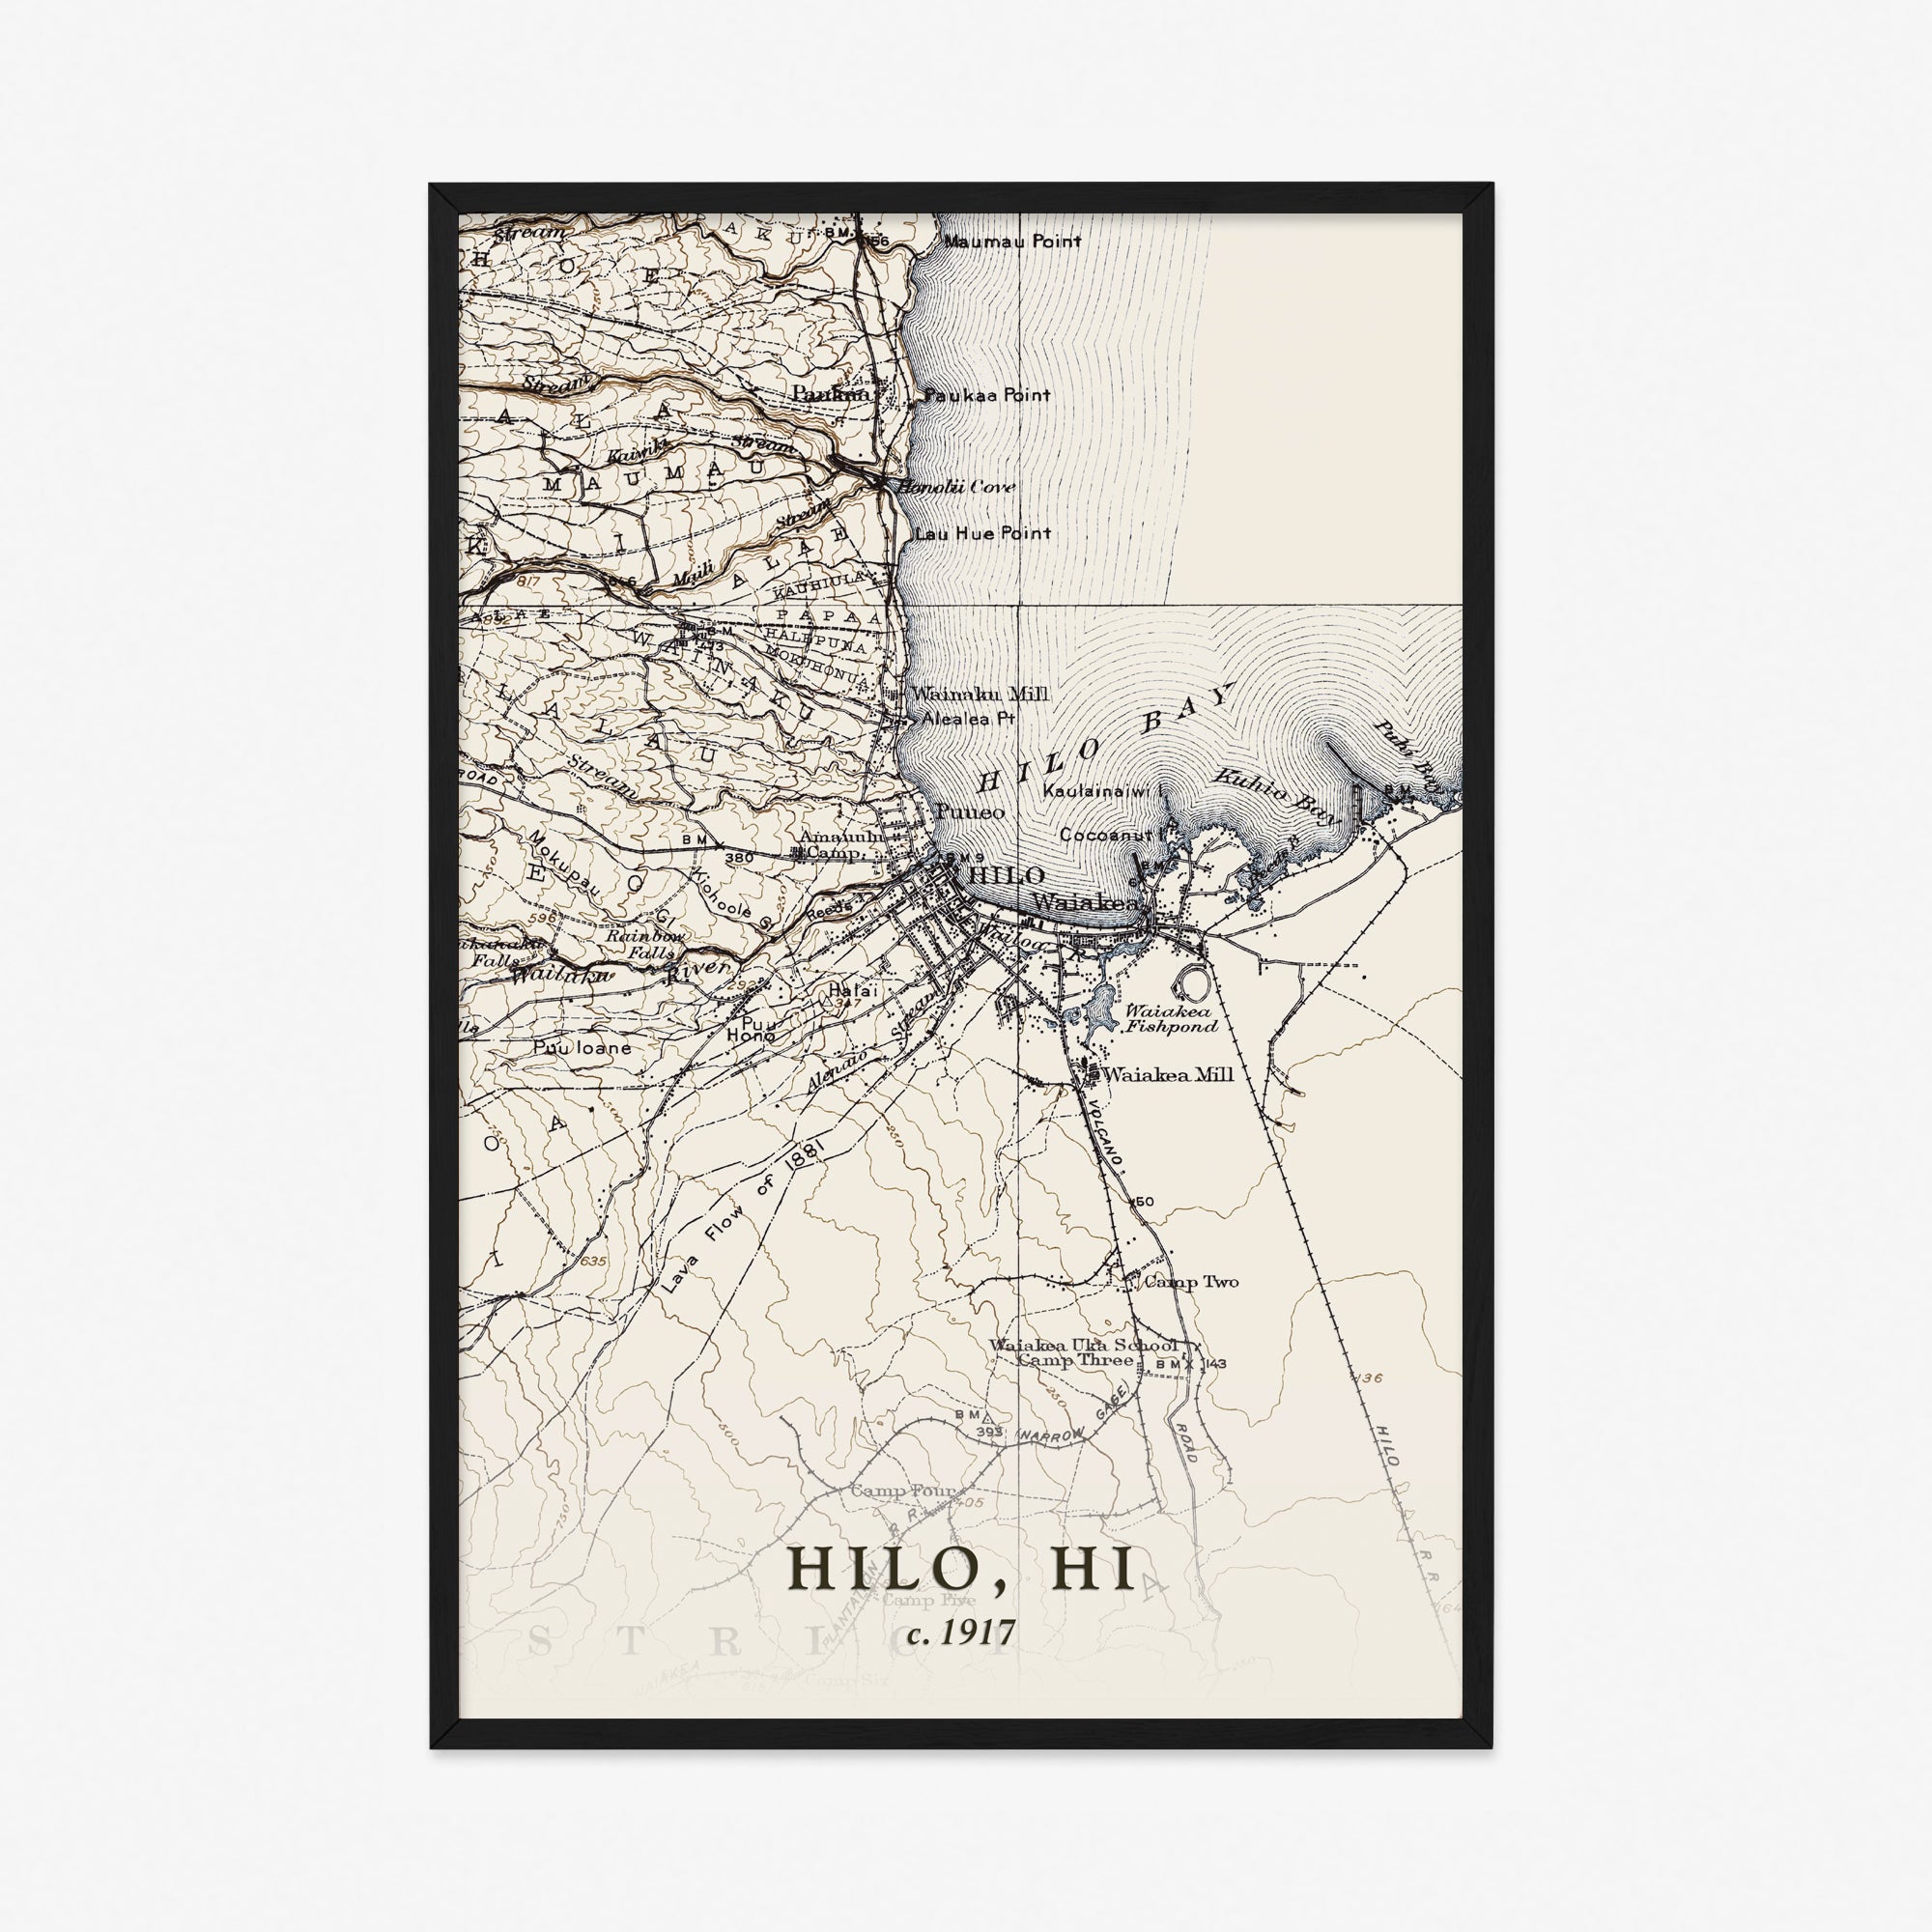 Hilo, HI - 1917 Topographic Map